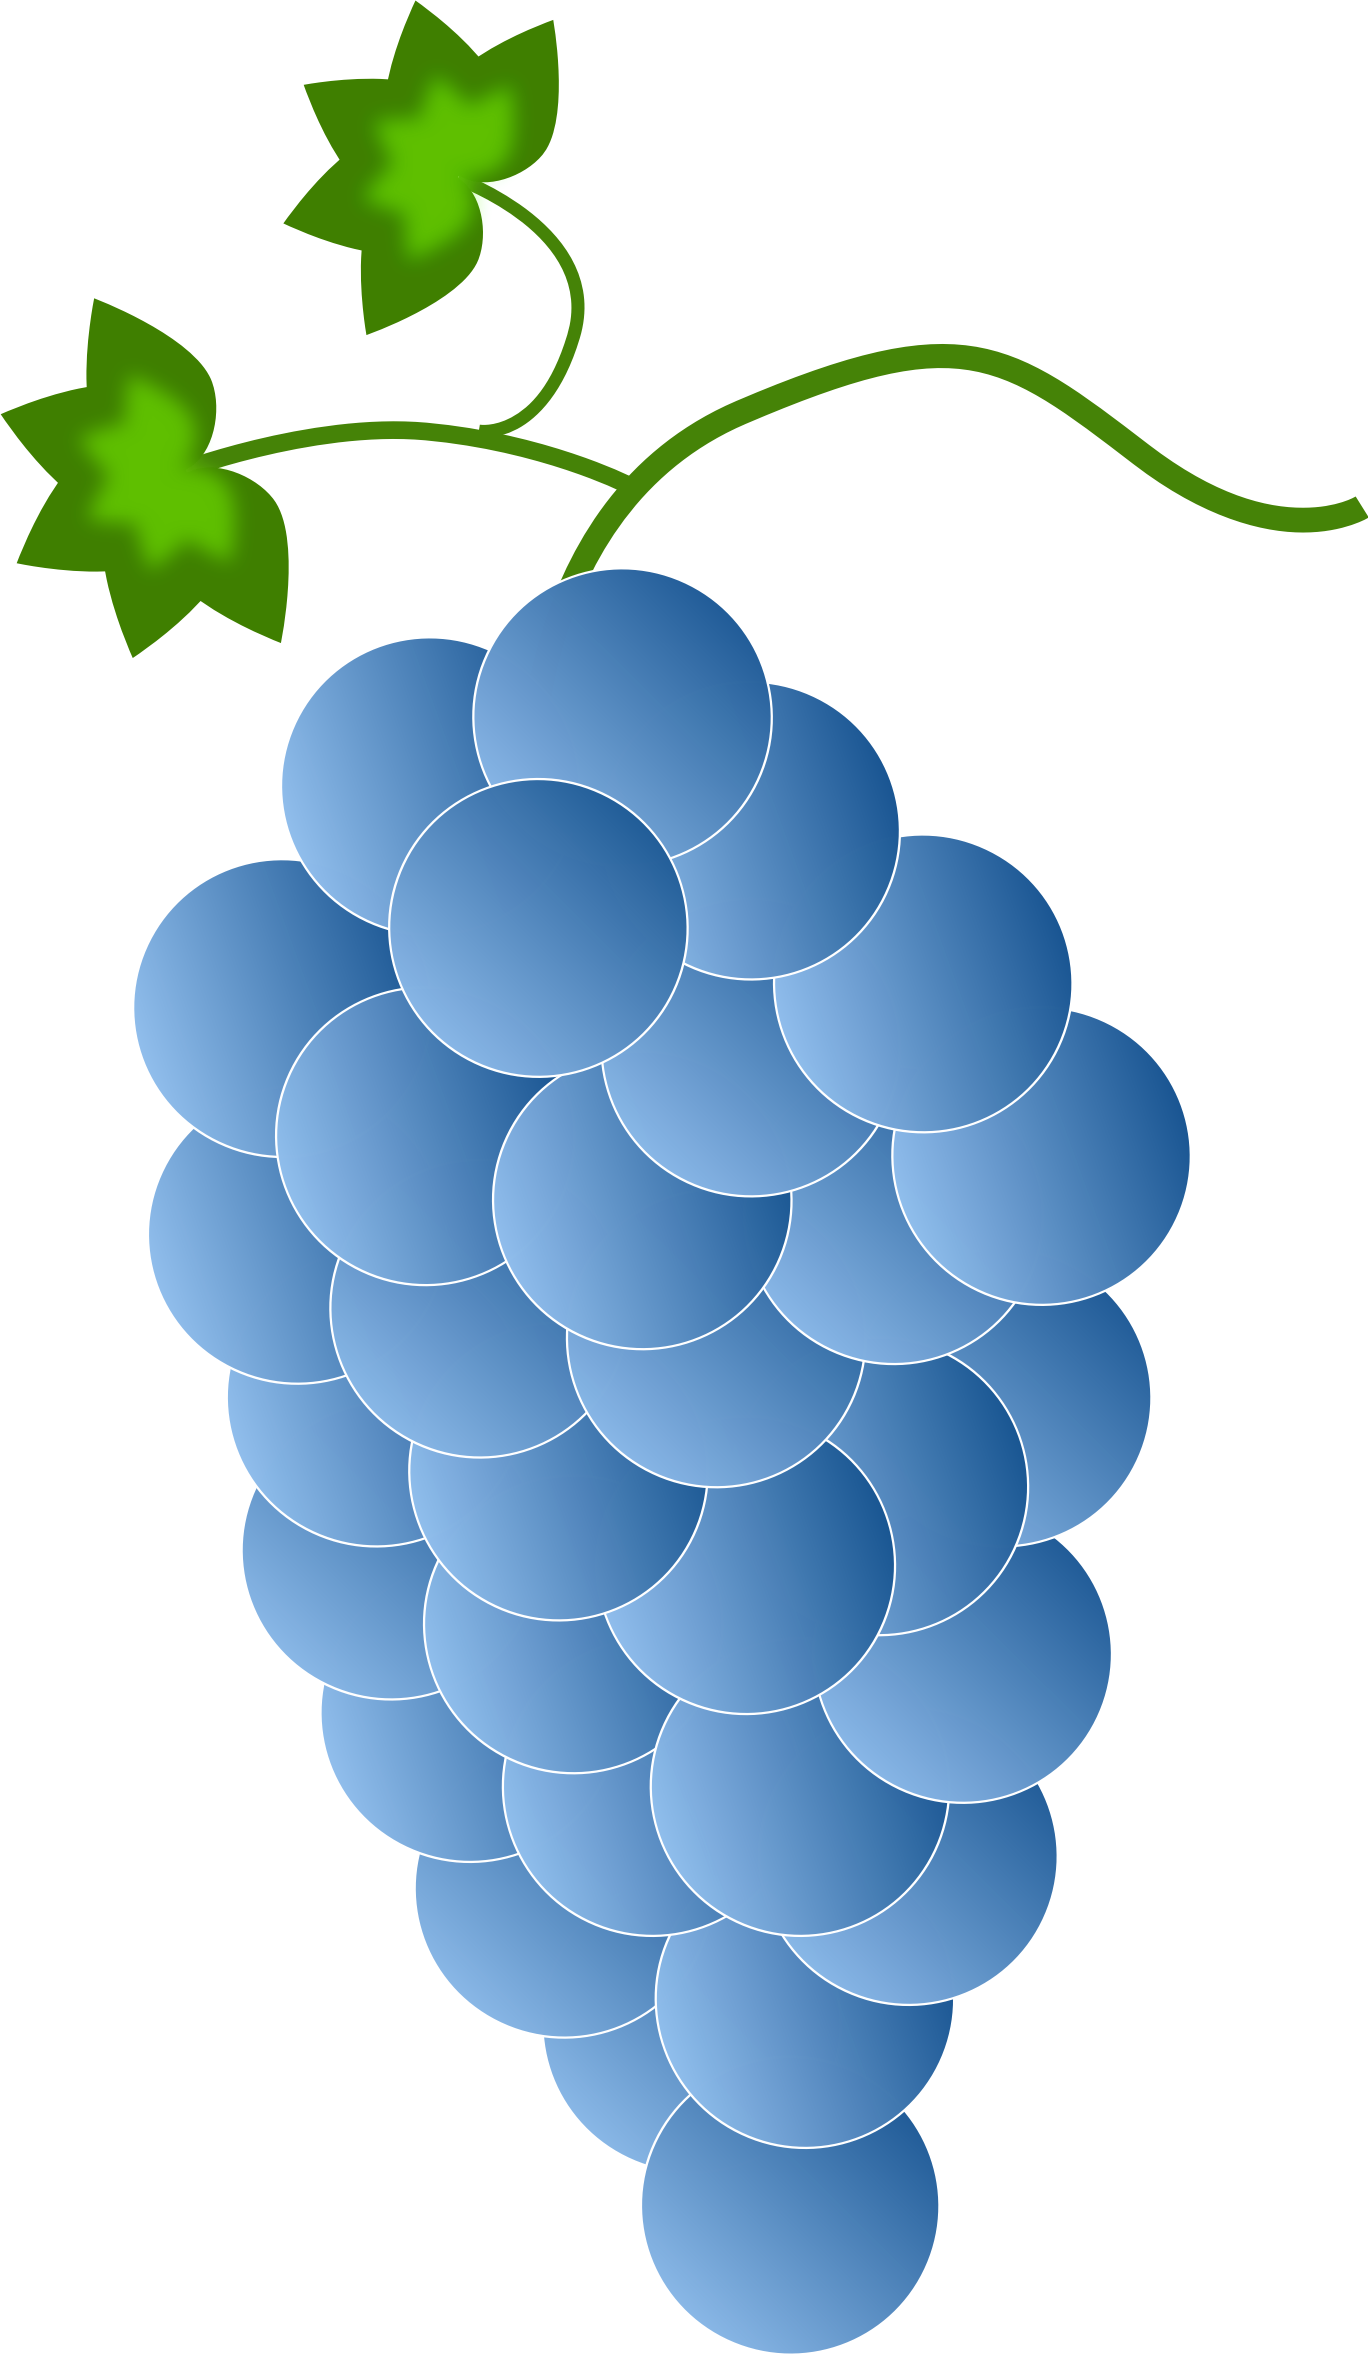 Grapes big image png. Grape clipart blue grape